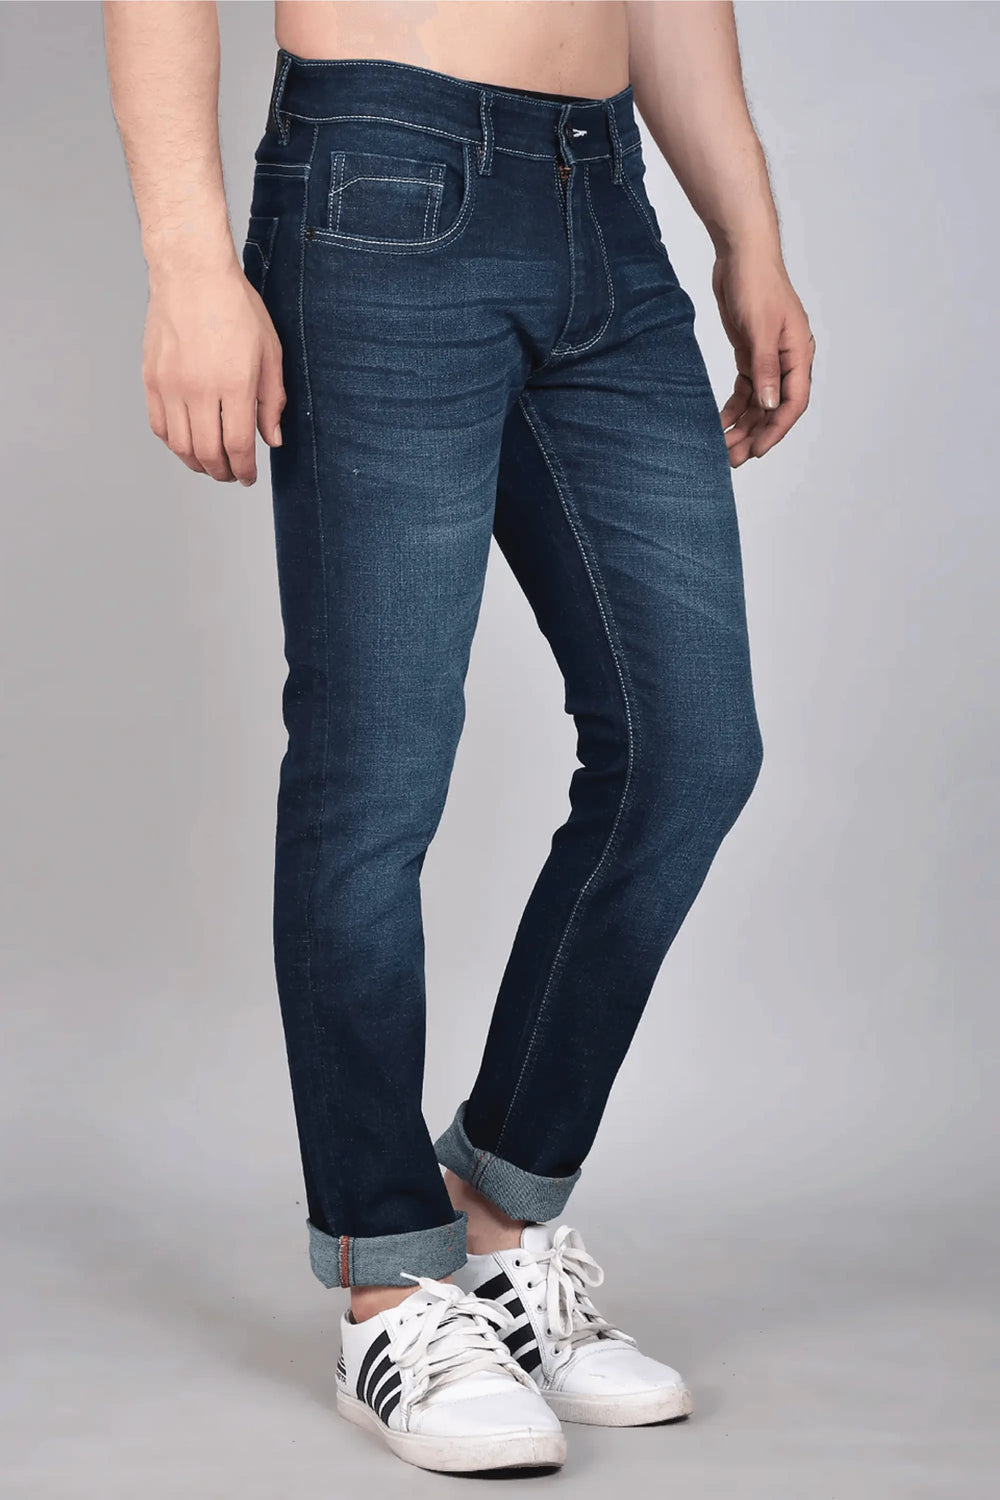 Slim Fit Blue with Green Tint Premium Men's Denim Jeans - Peplos Jeans 